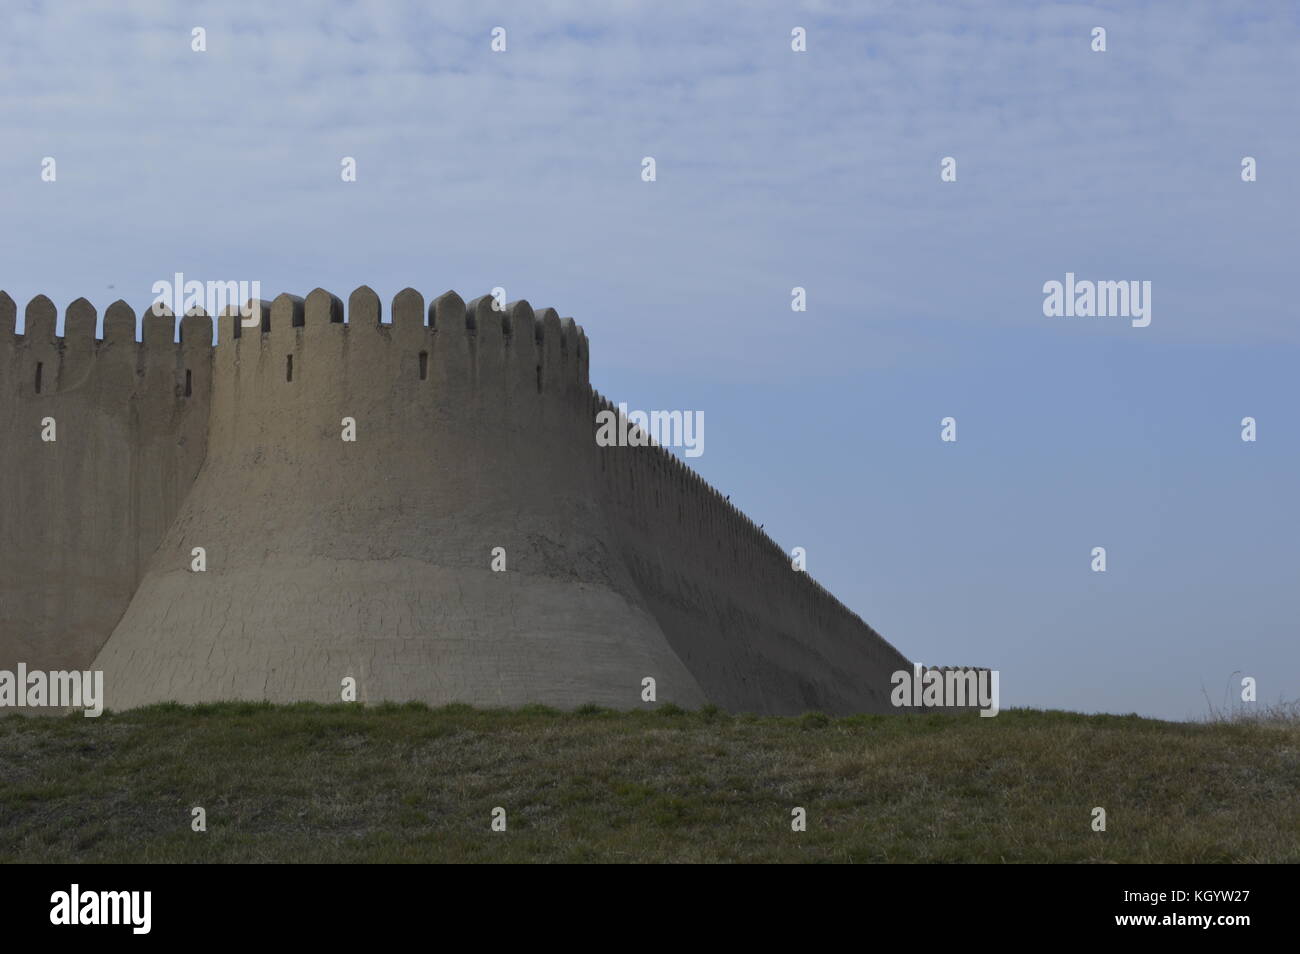 City wall of Turkestan is an ancient city, Kazakhstan, with archelogic record dating back to the 4th century. Many mausoleums; Khwaja Ahmad Yasavi Stock Photo